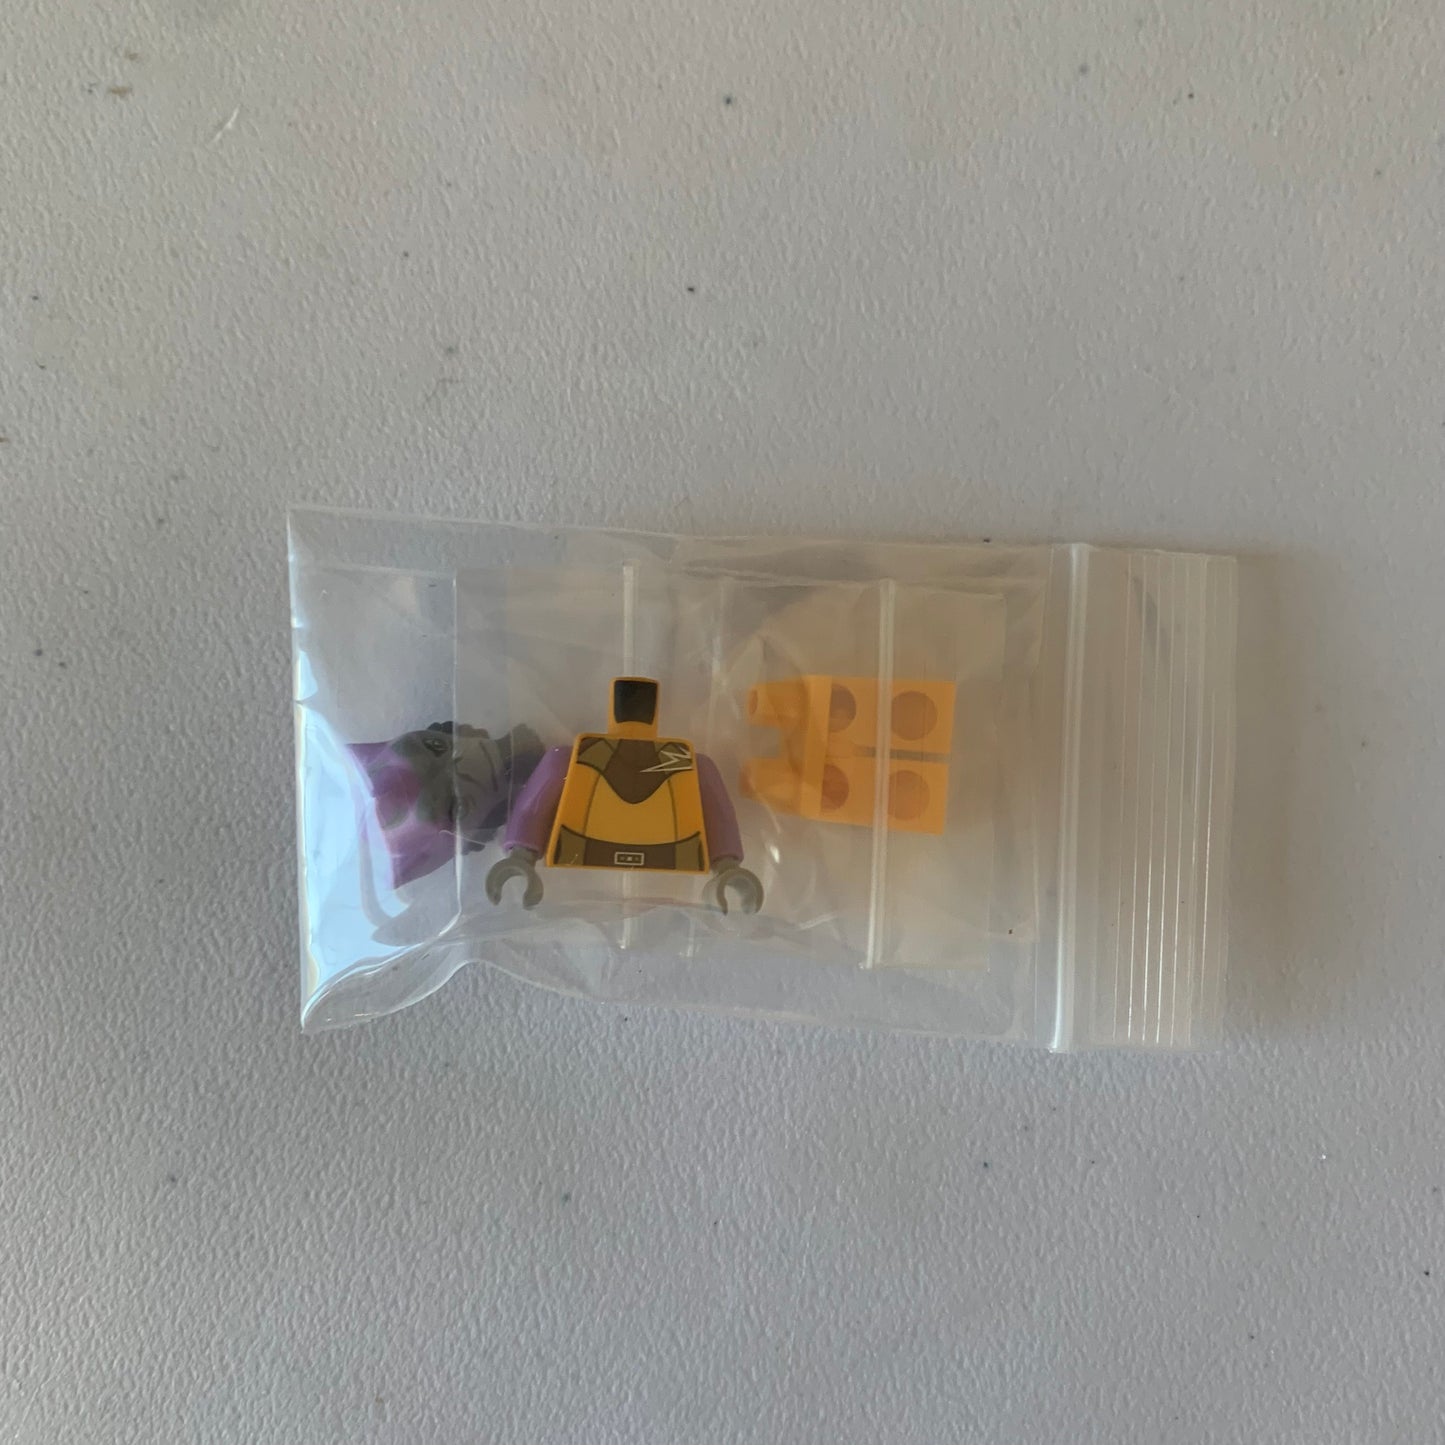 LEGO Zeb Minifigure